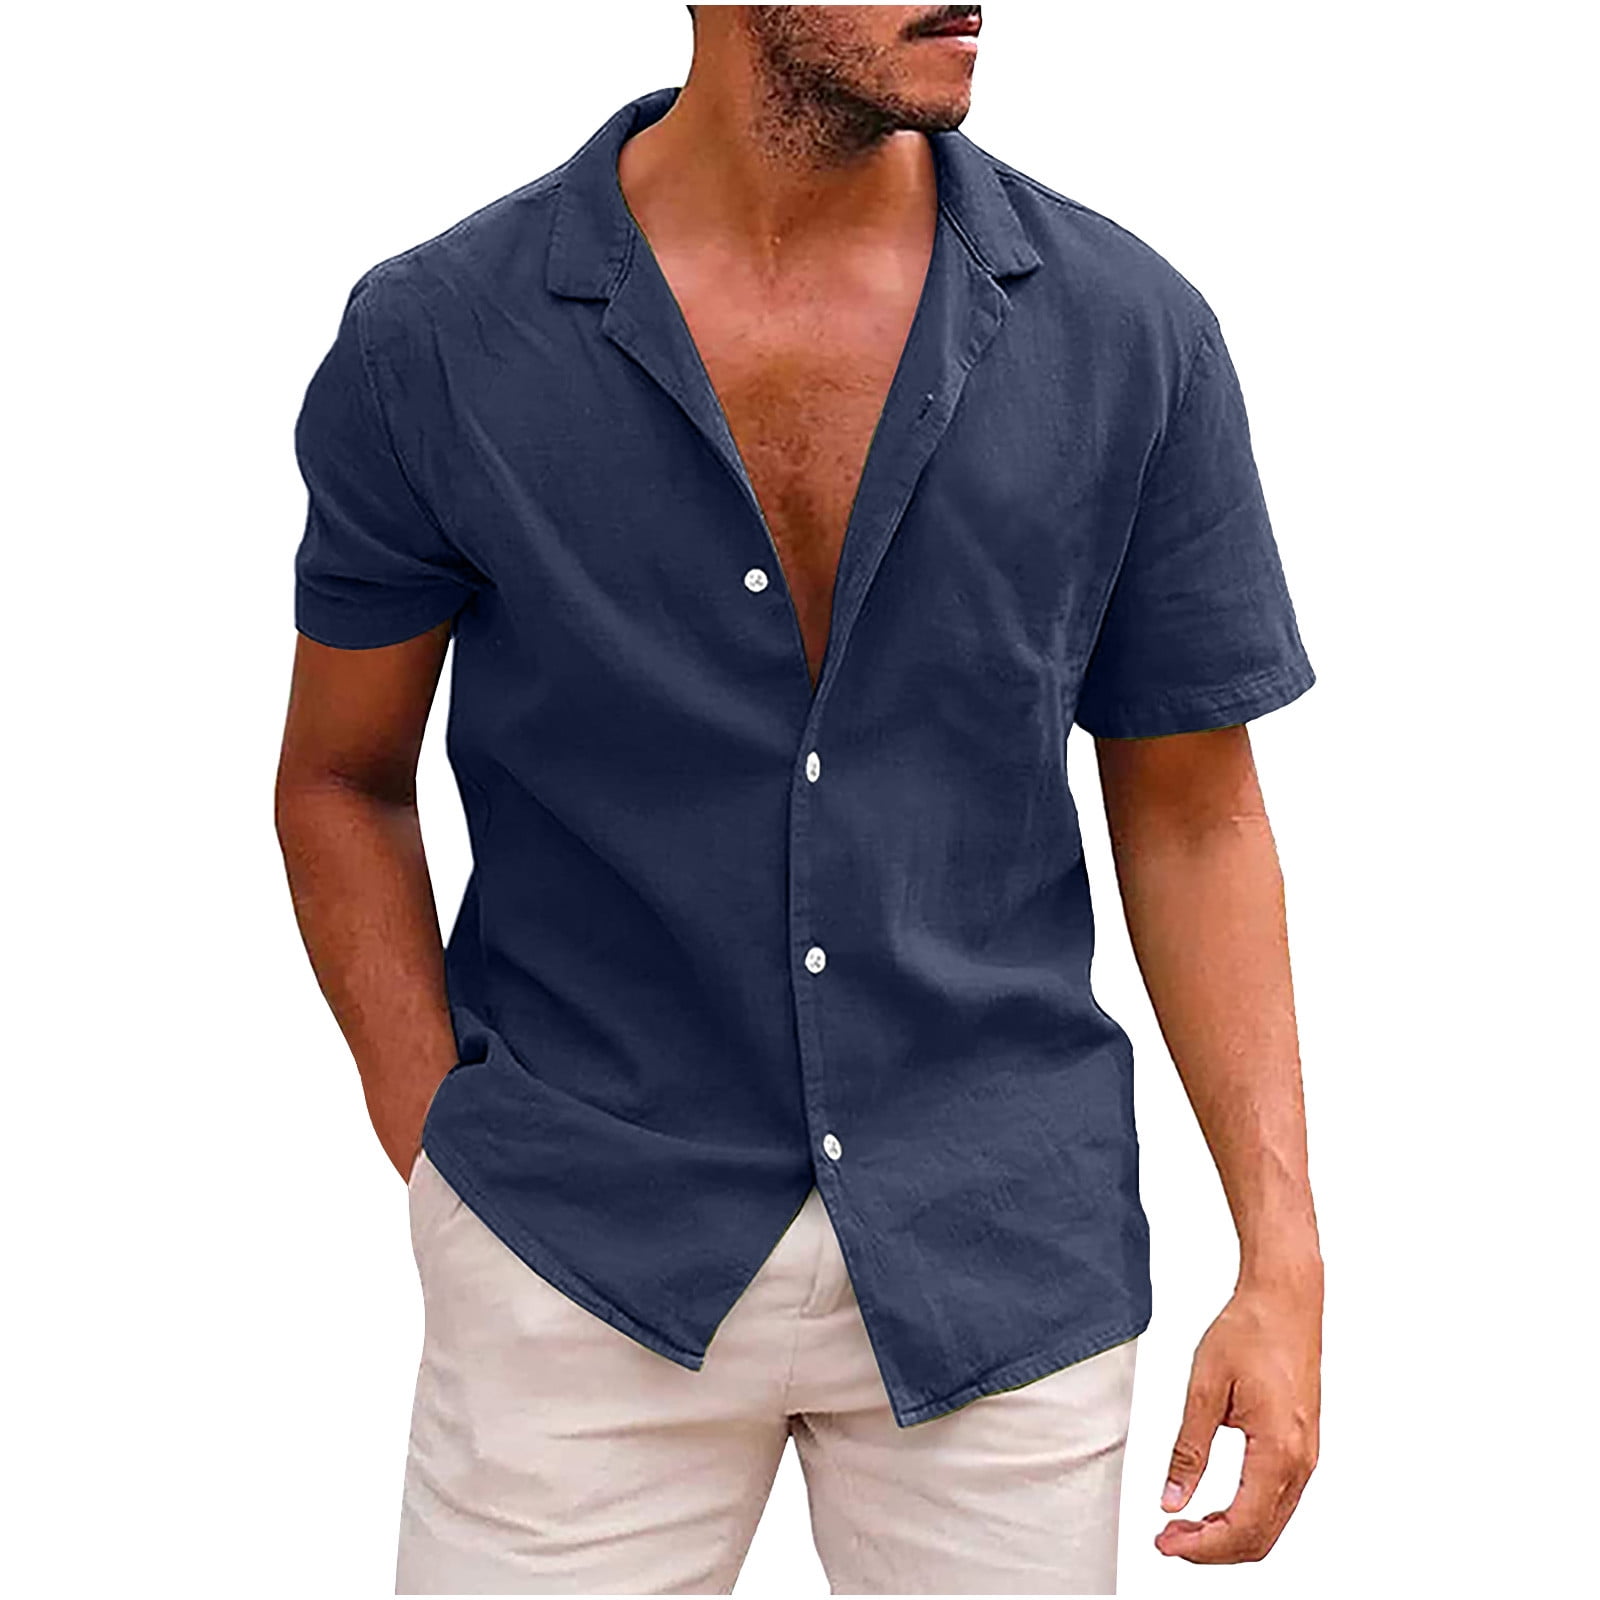 RYRJJ On Clearance Men's Short Sleeve Regular Fit Dress Shirts Button Down  Shirts Summer Casual Beach Shirt with Chest Pocket Light Blue L